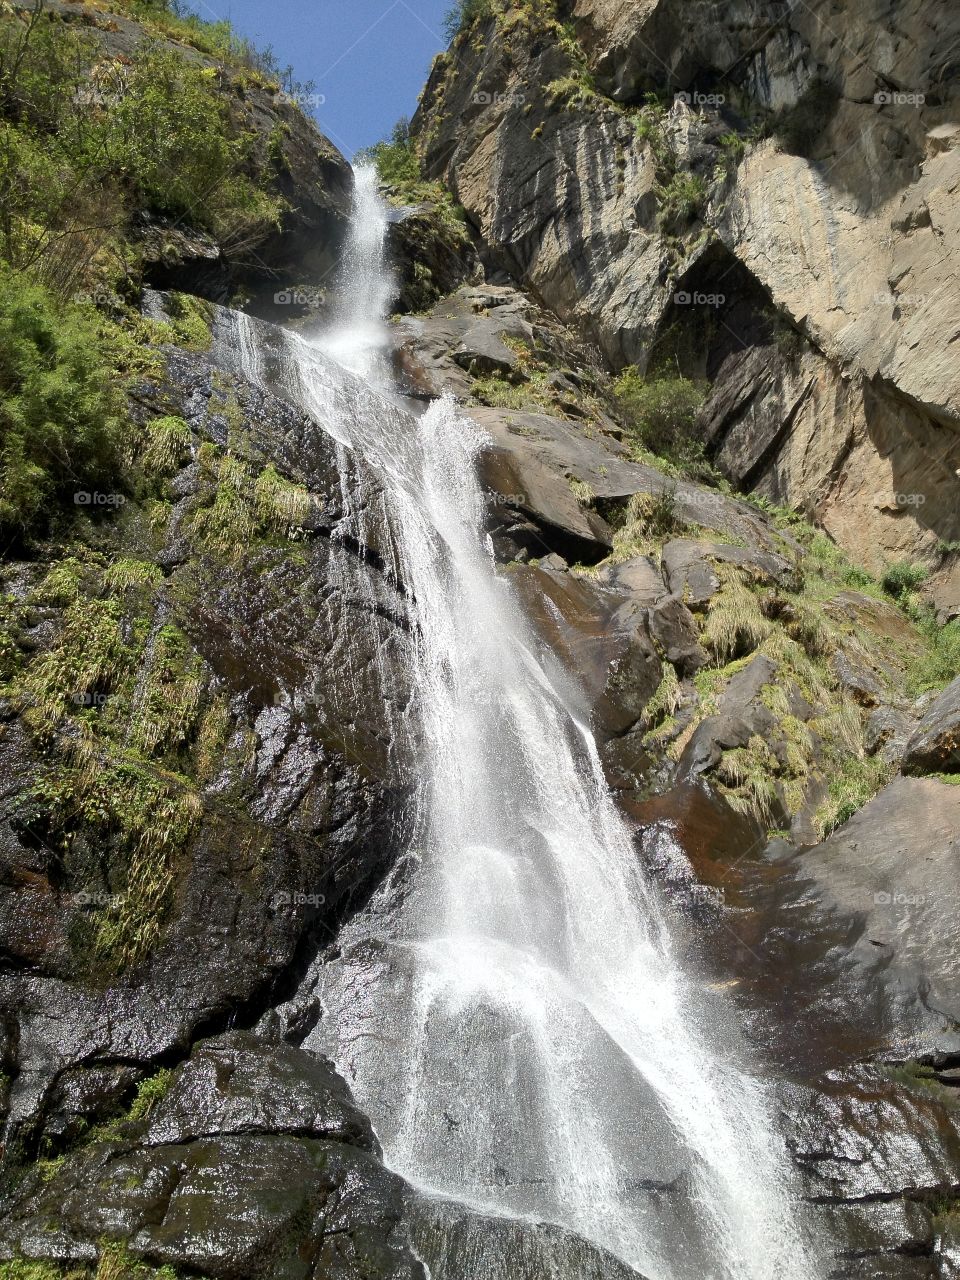 Waterfall at Tiger's Nest Monastery, Bhutan